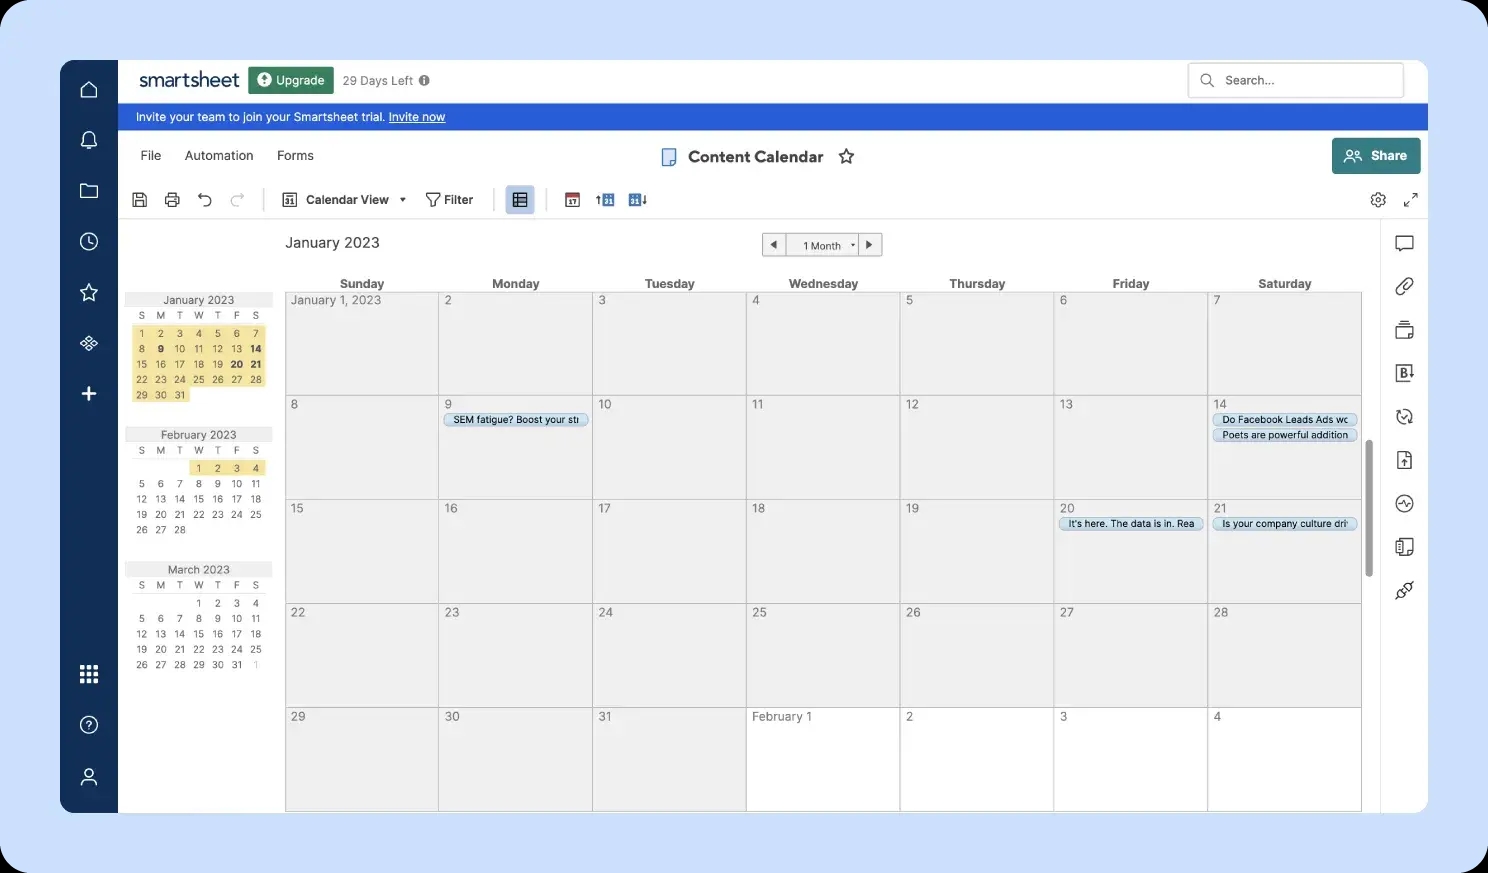 content-calendar-tools-03-smartsheet.webp